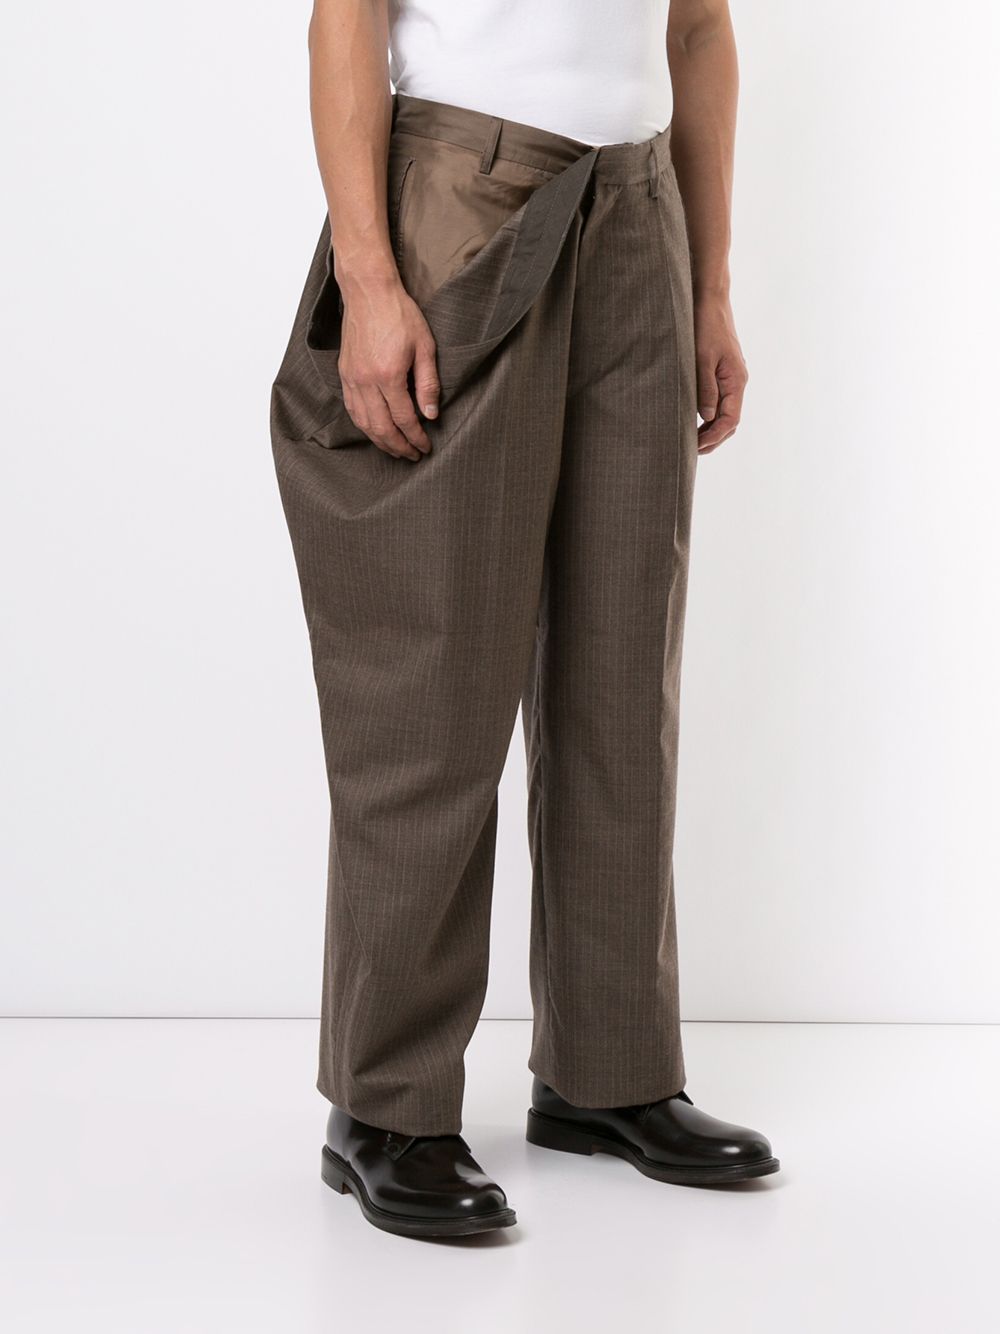 фото Hed mayner брюки с драпировками